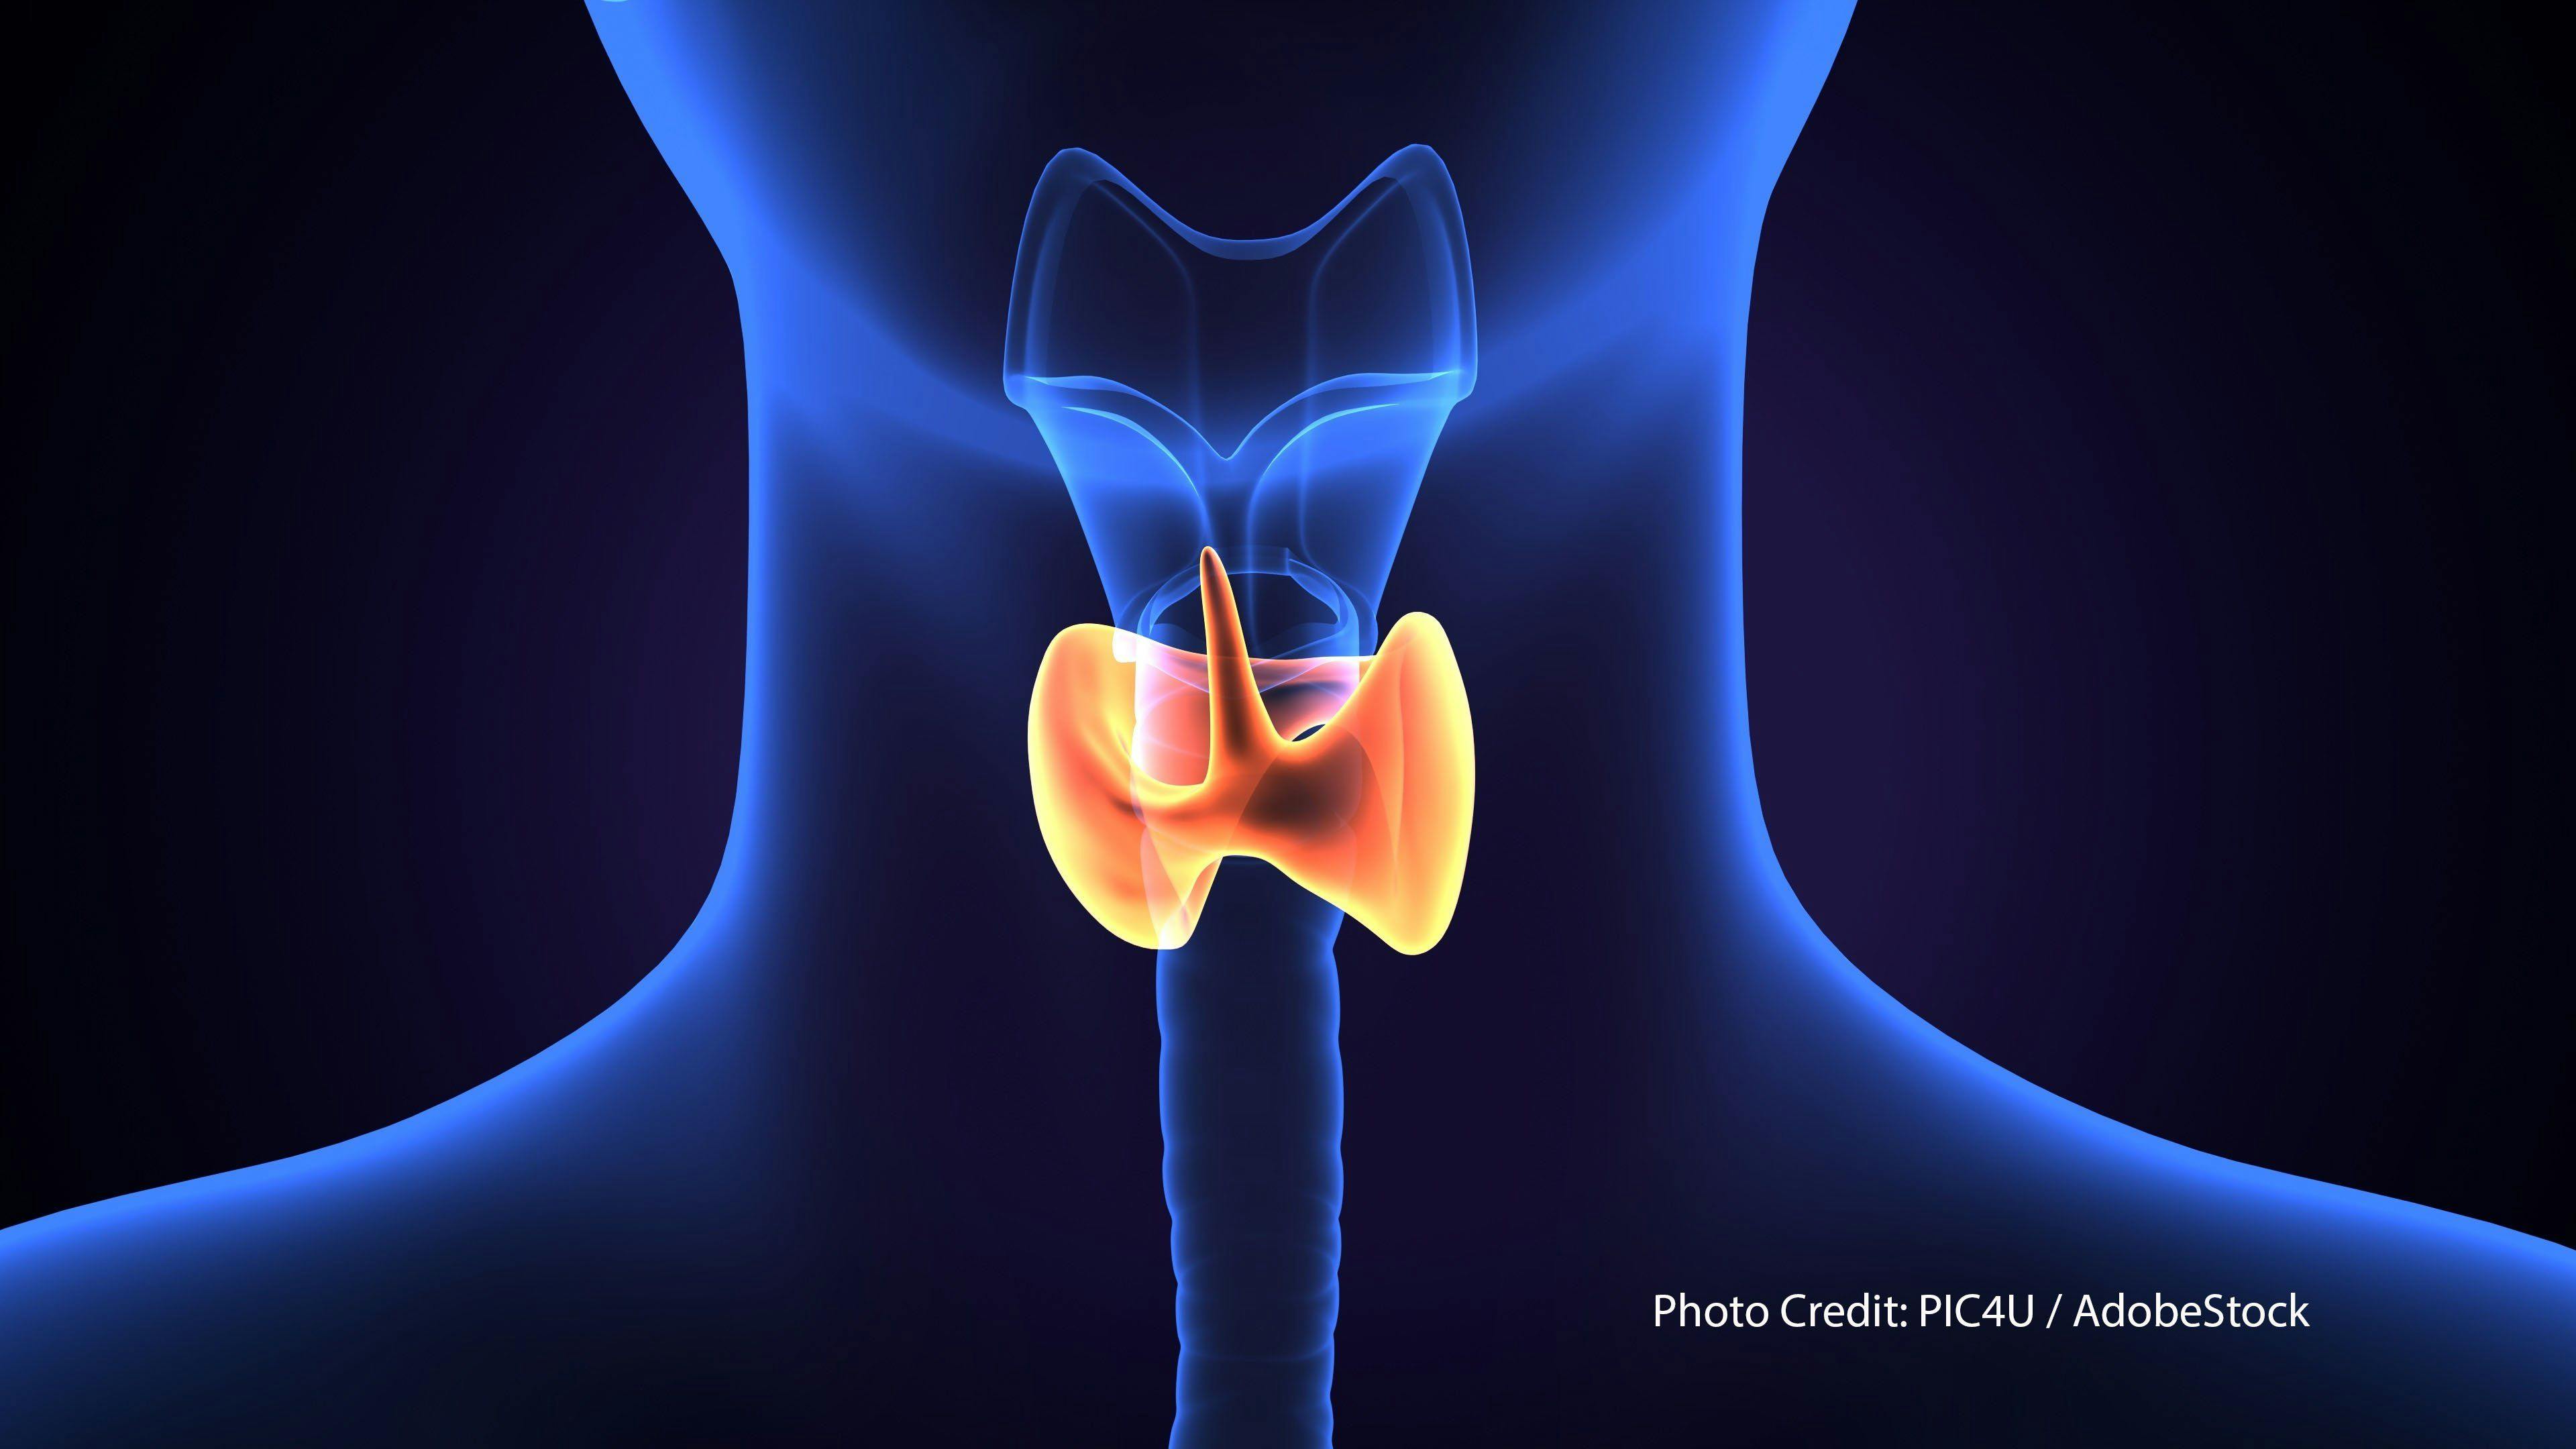 Improved diagnostics for thyroid cancer on horizon